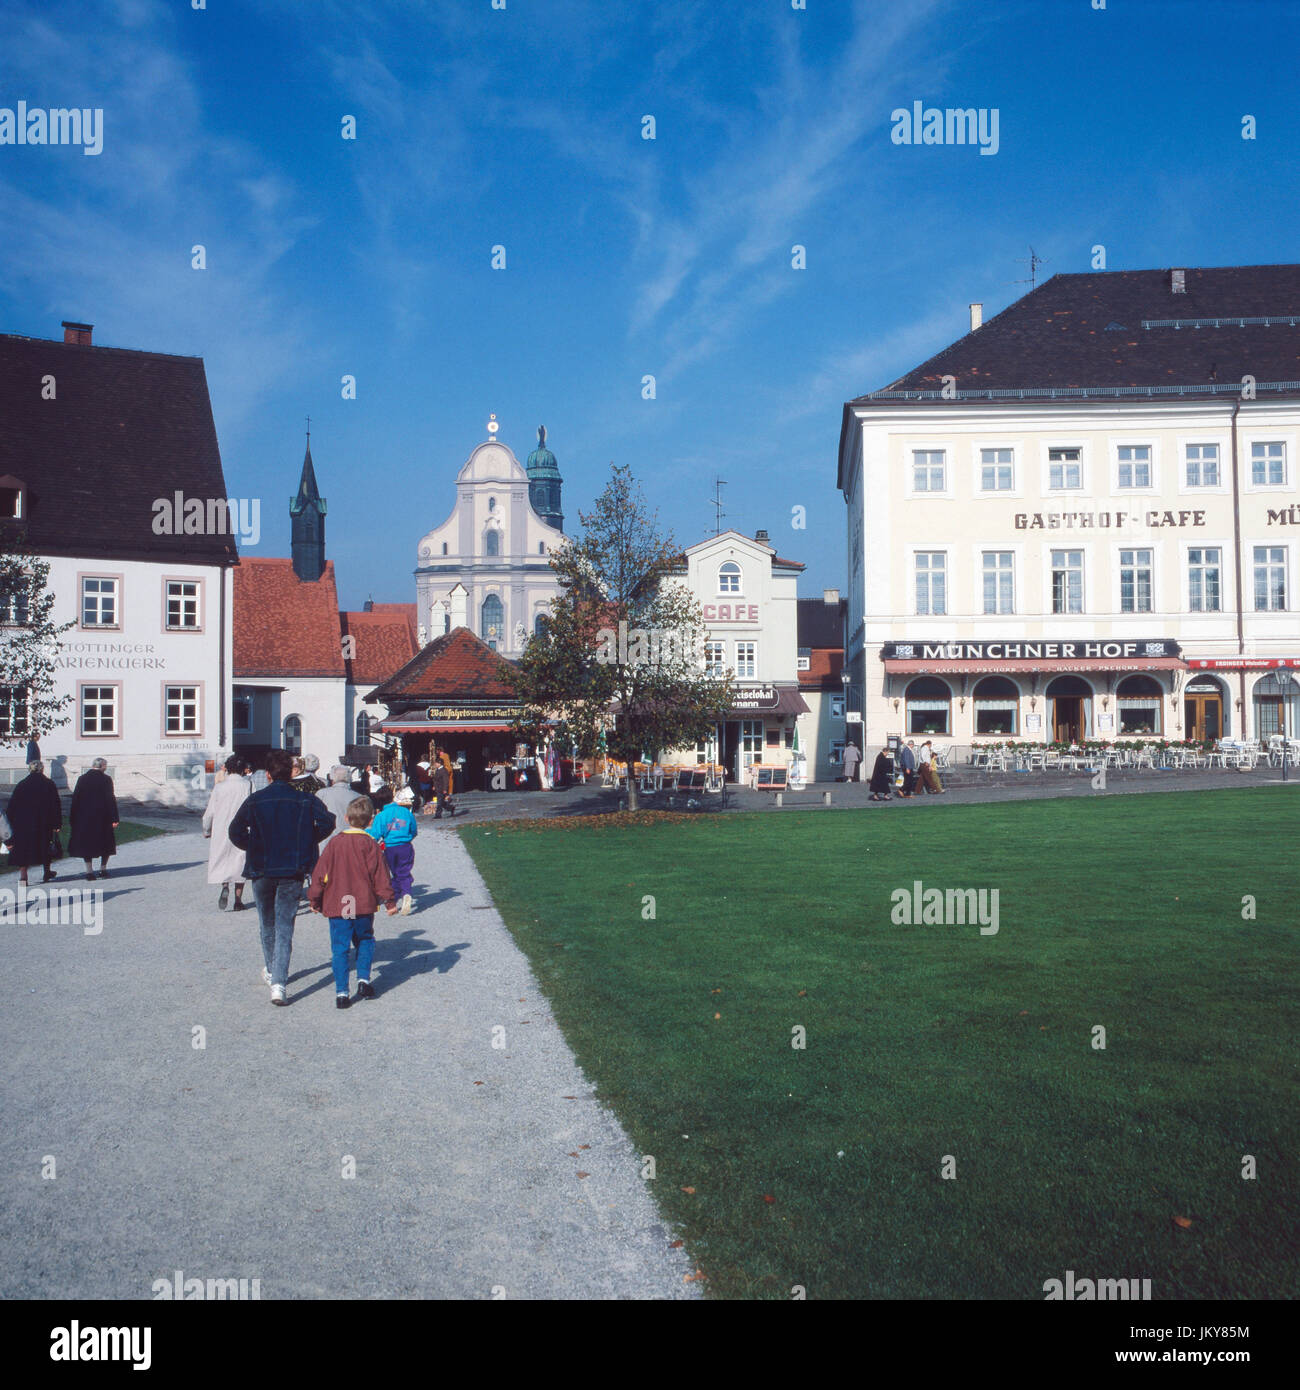 Kapellplatz di Altötting in Bayern, Deutschland, 1980er. Kapell square di Altötting in Baviera, Germania degli anni ottanta. Foto Stock